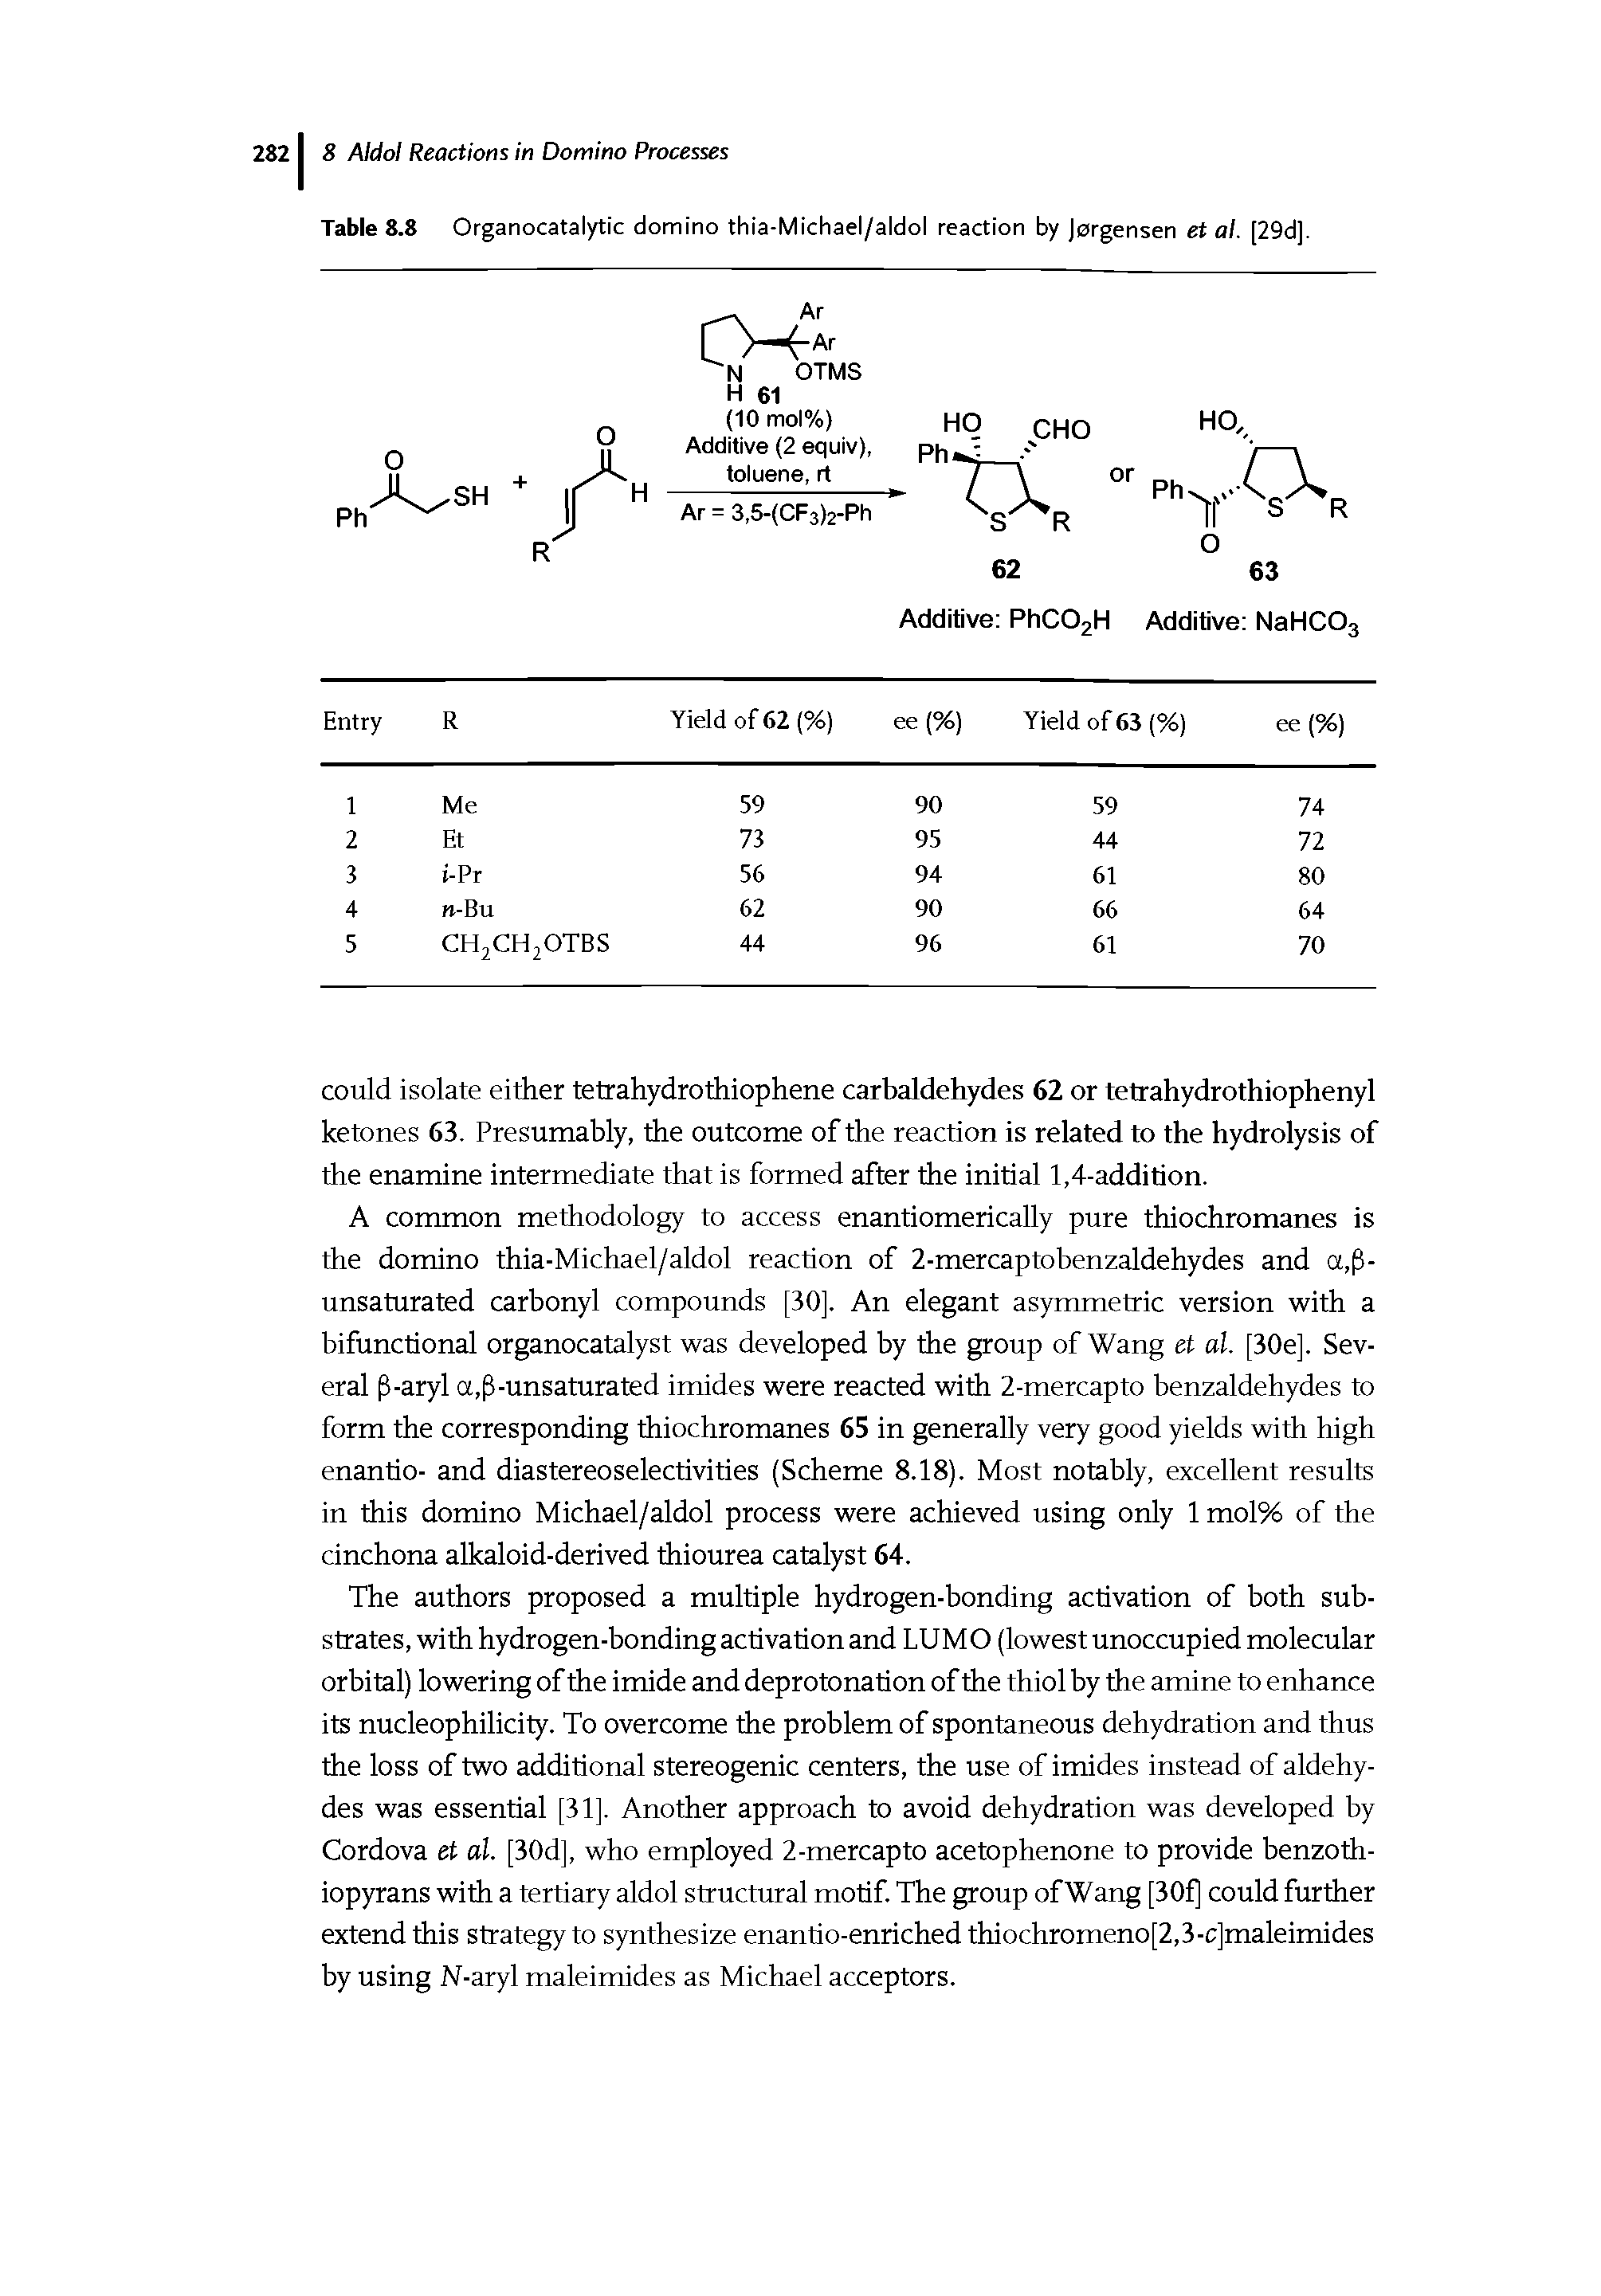 Table 8.8 Organocatalytic domino thia-Michael/aldol reaction by Jorgensen et al. [29d].